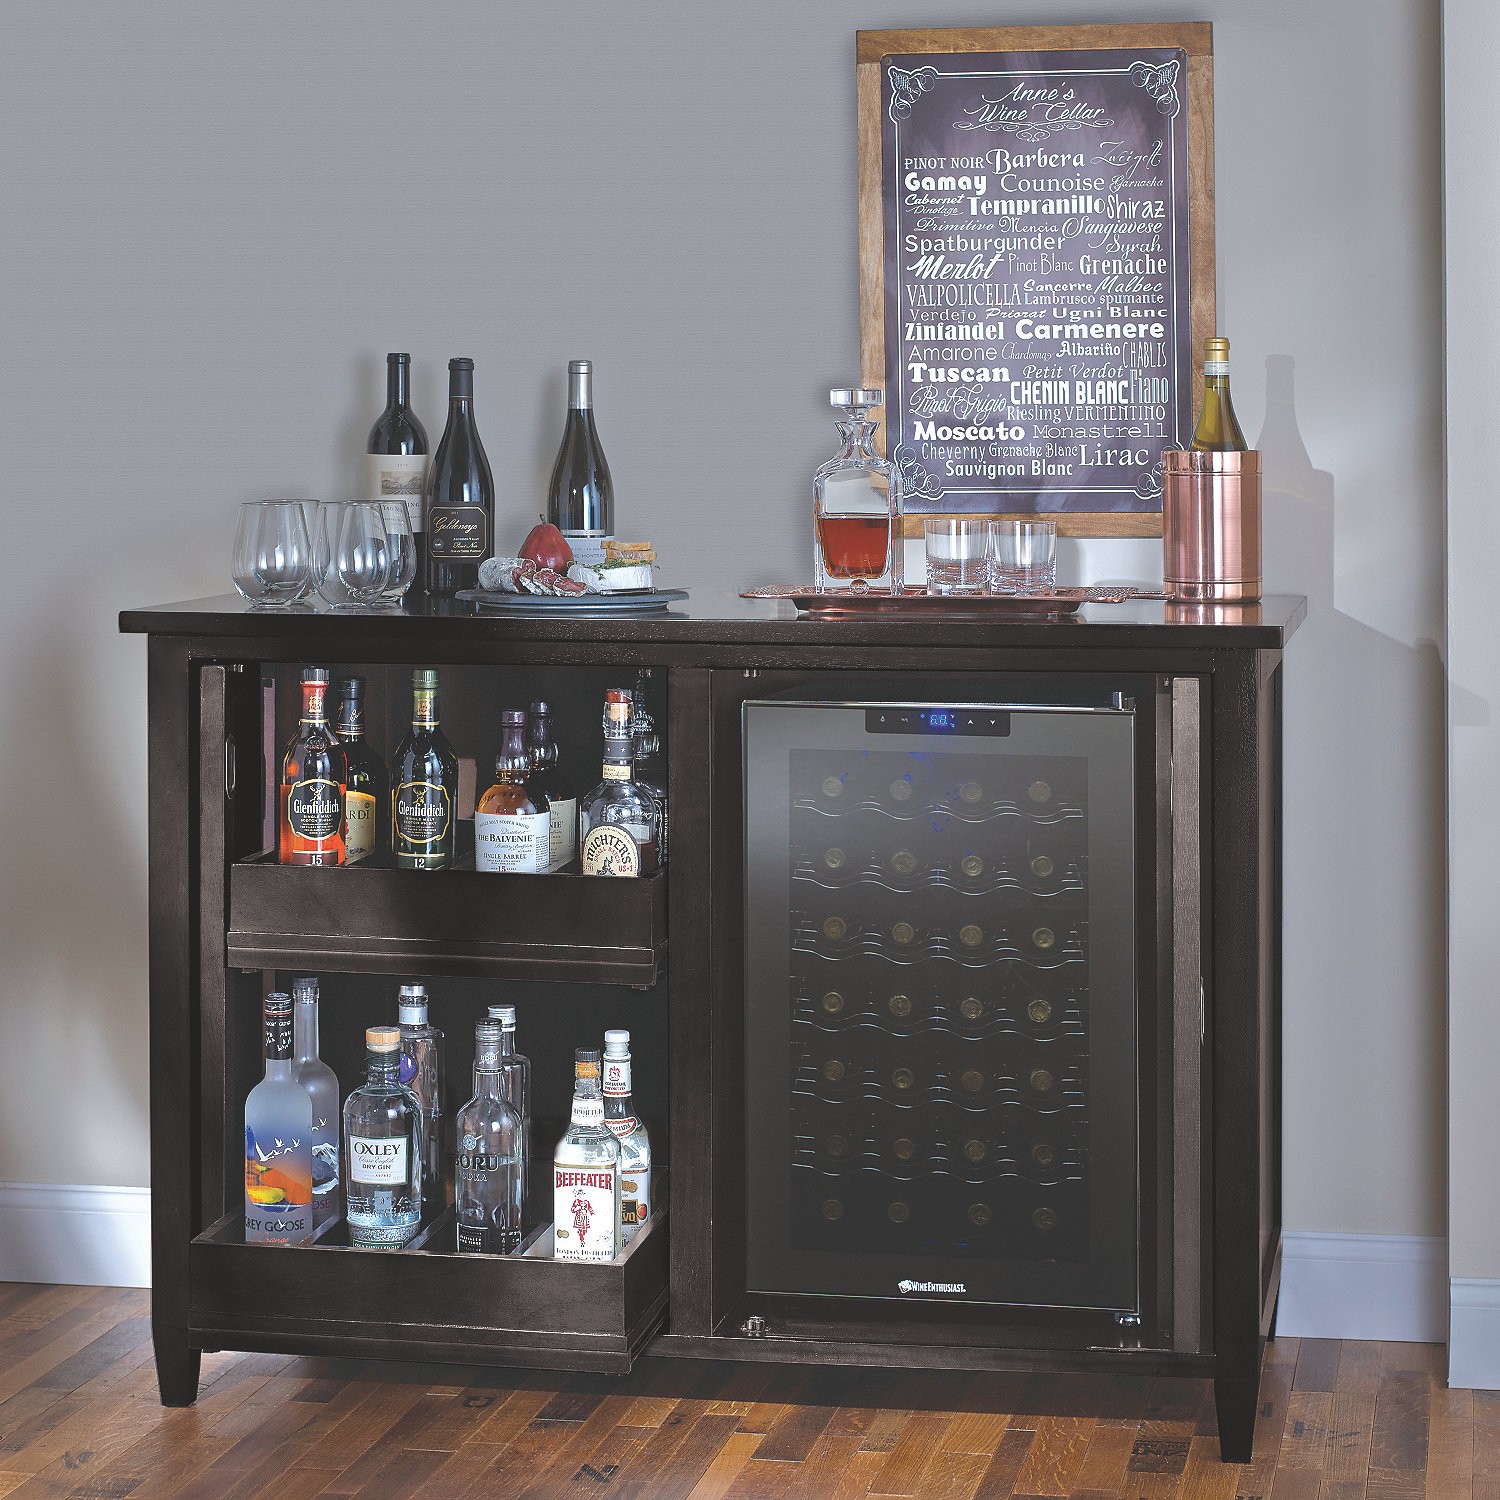 Refrigerated wine cabinet credenza cabinets matttroy